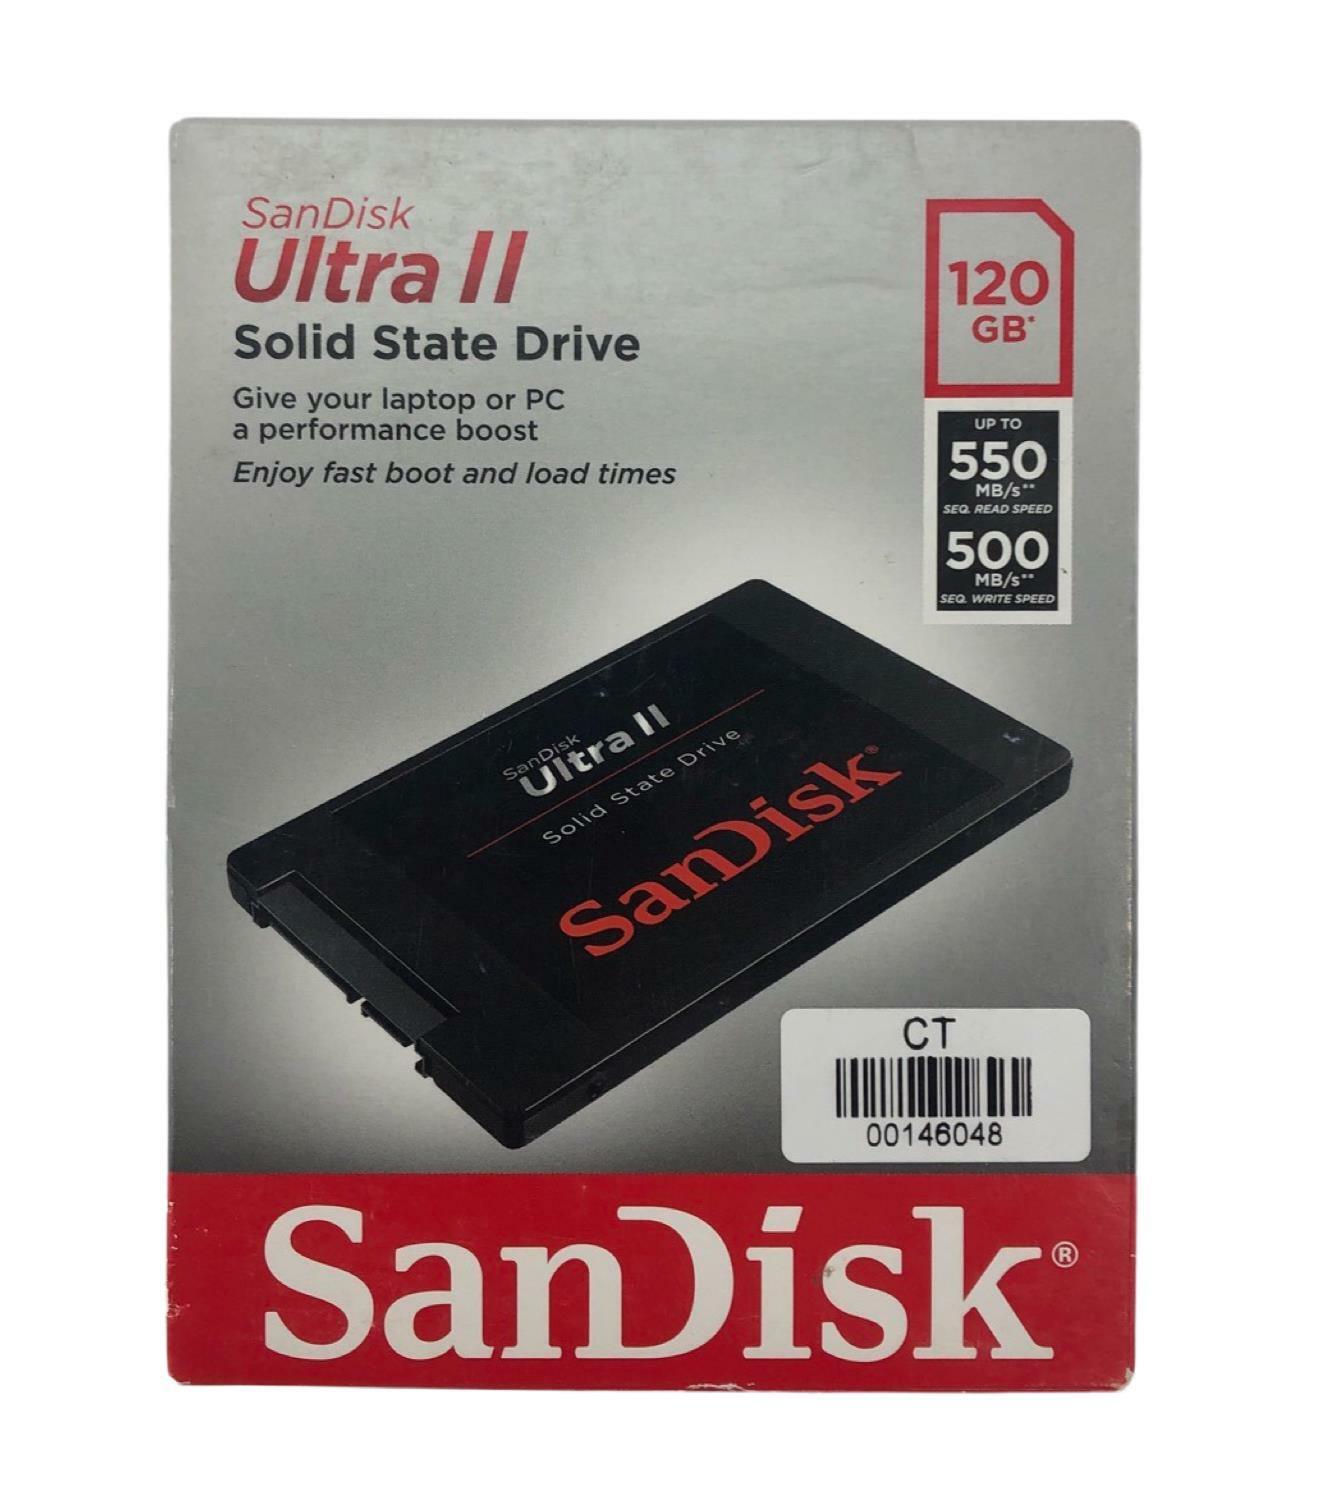 NEW - SanDisk Ultra II 120GB SSD SDSSDHII-120G 2.5" SATA 6G/s Solid State Drive